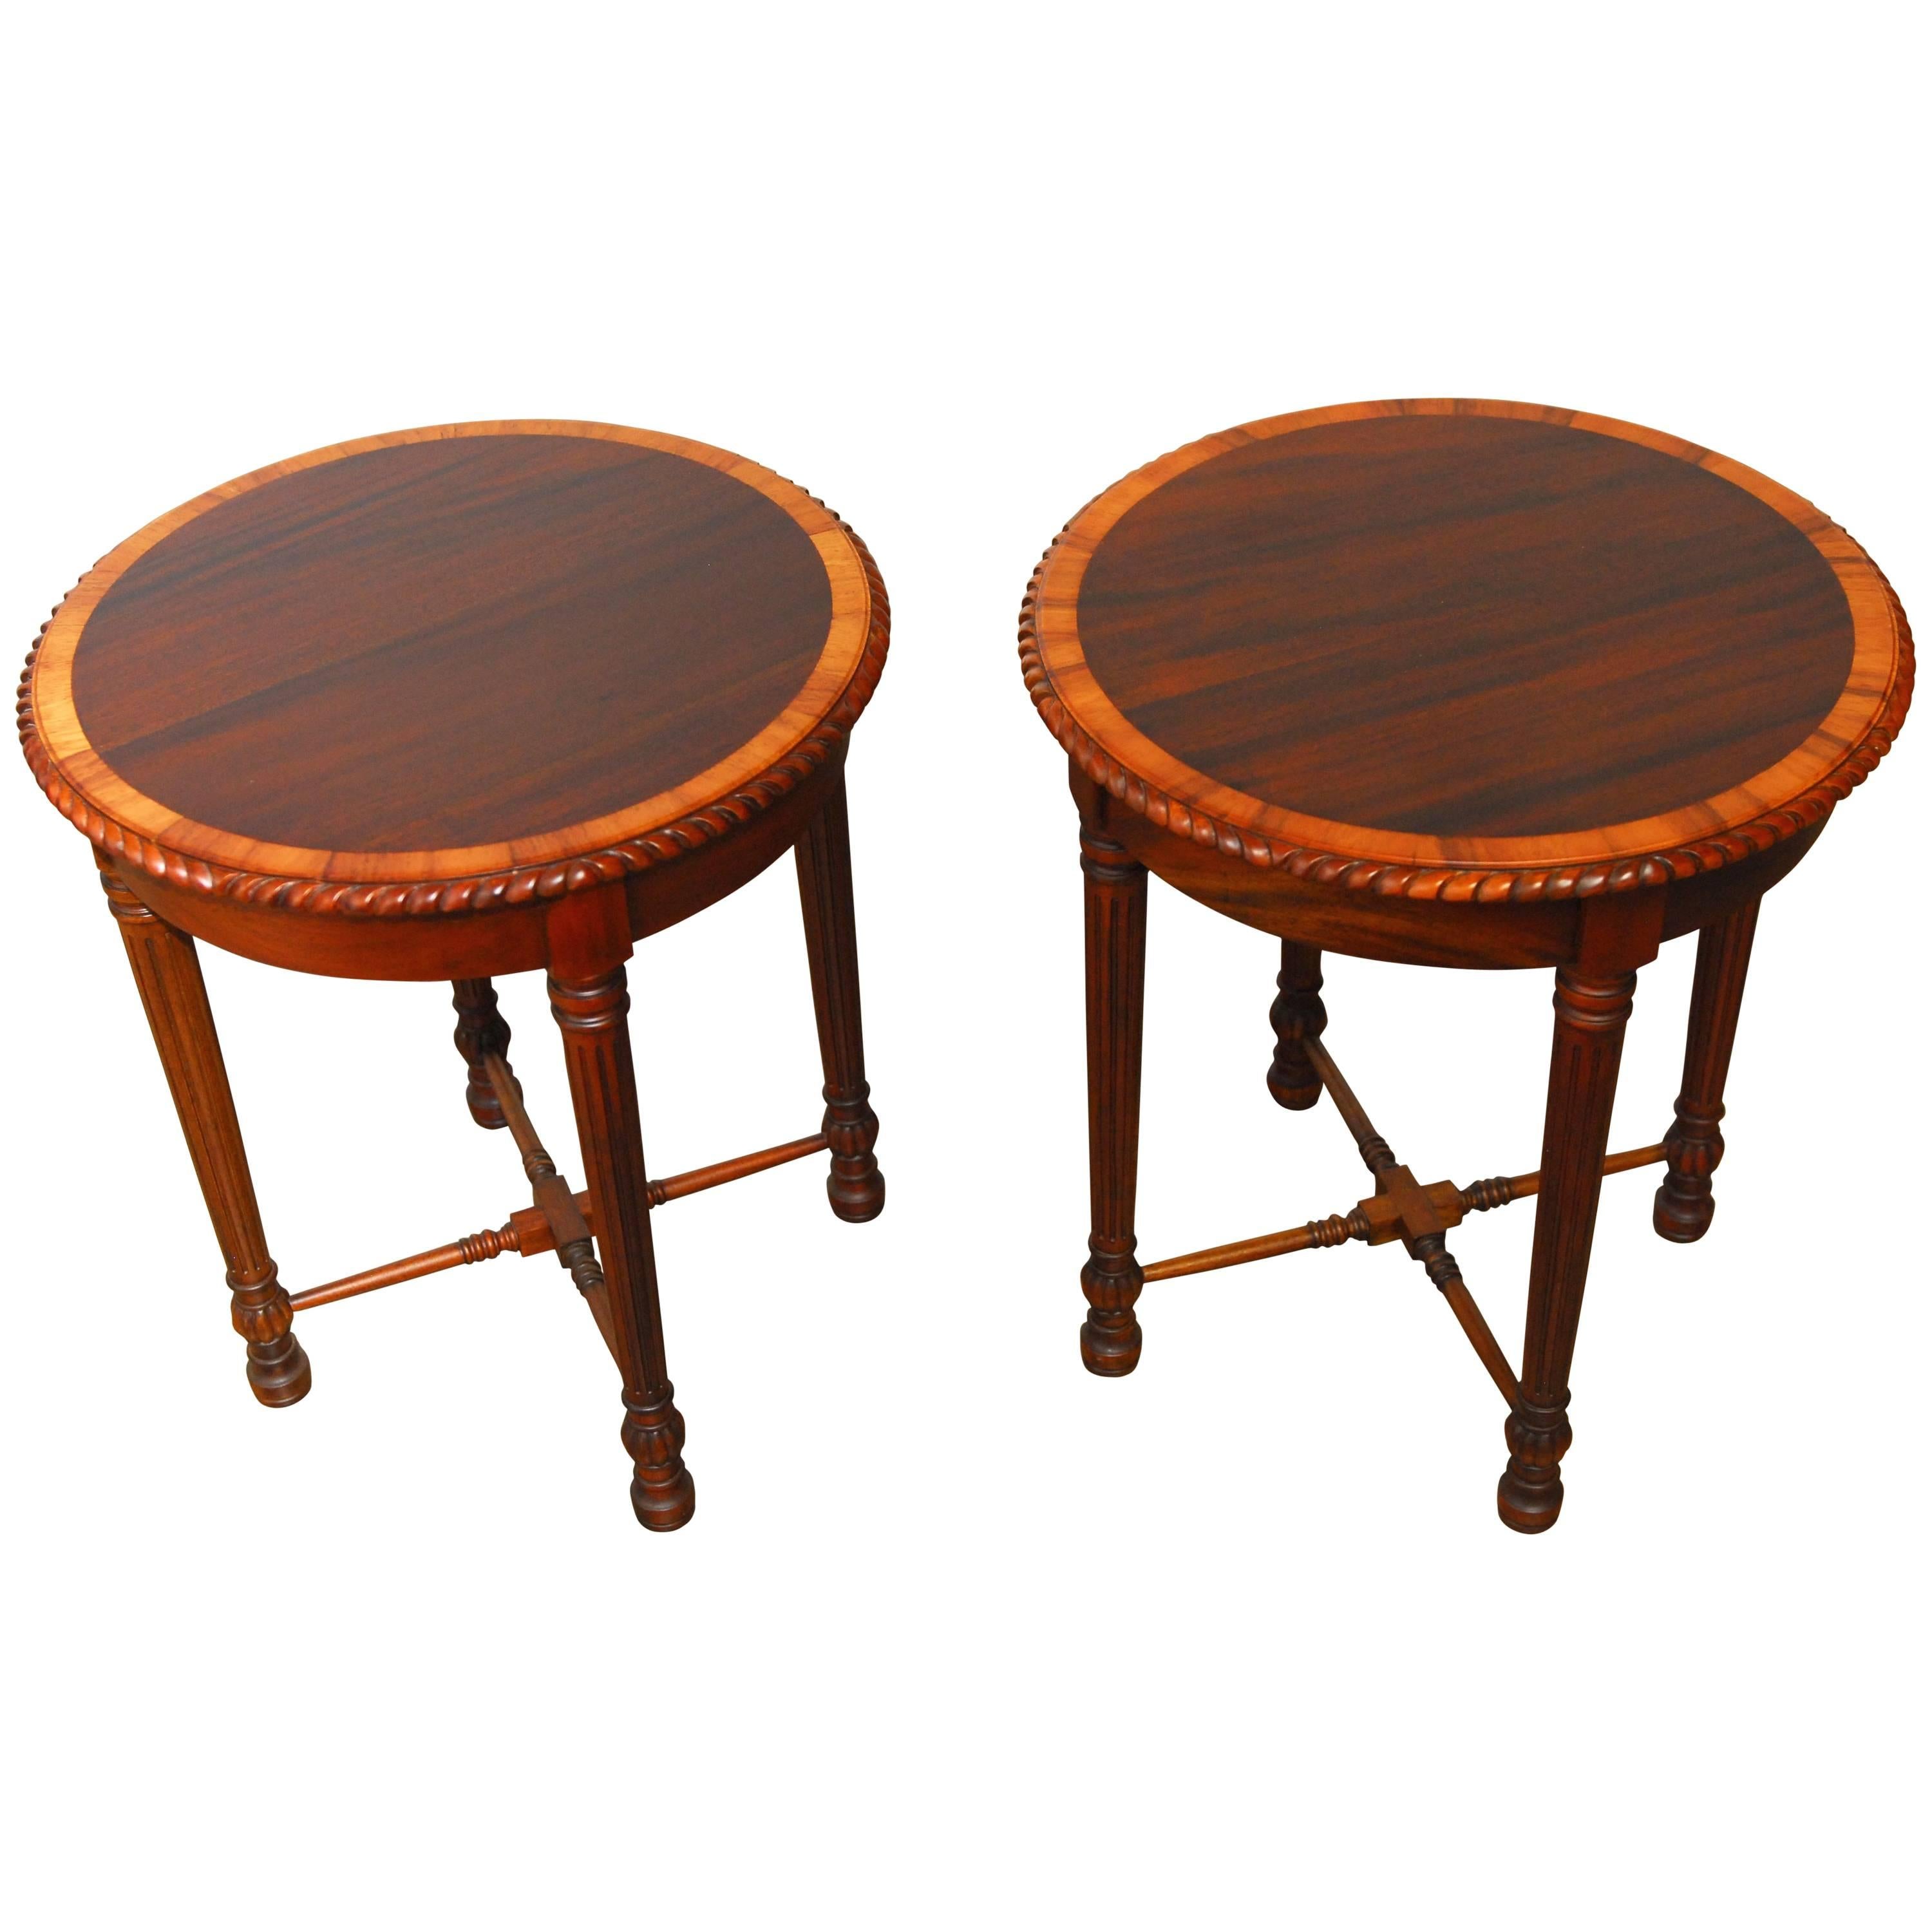 Pair of Regency Carved Mahogany Gueridon Side Tables